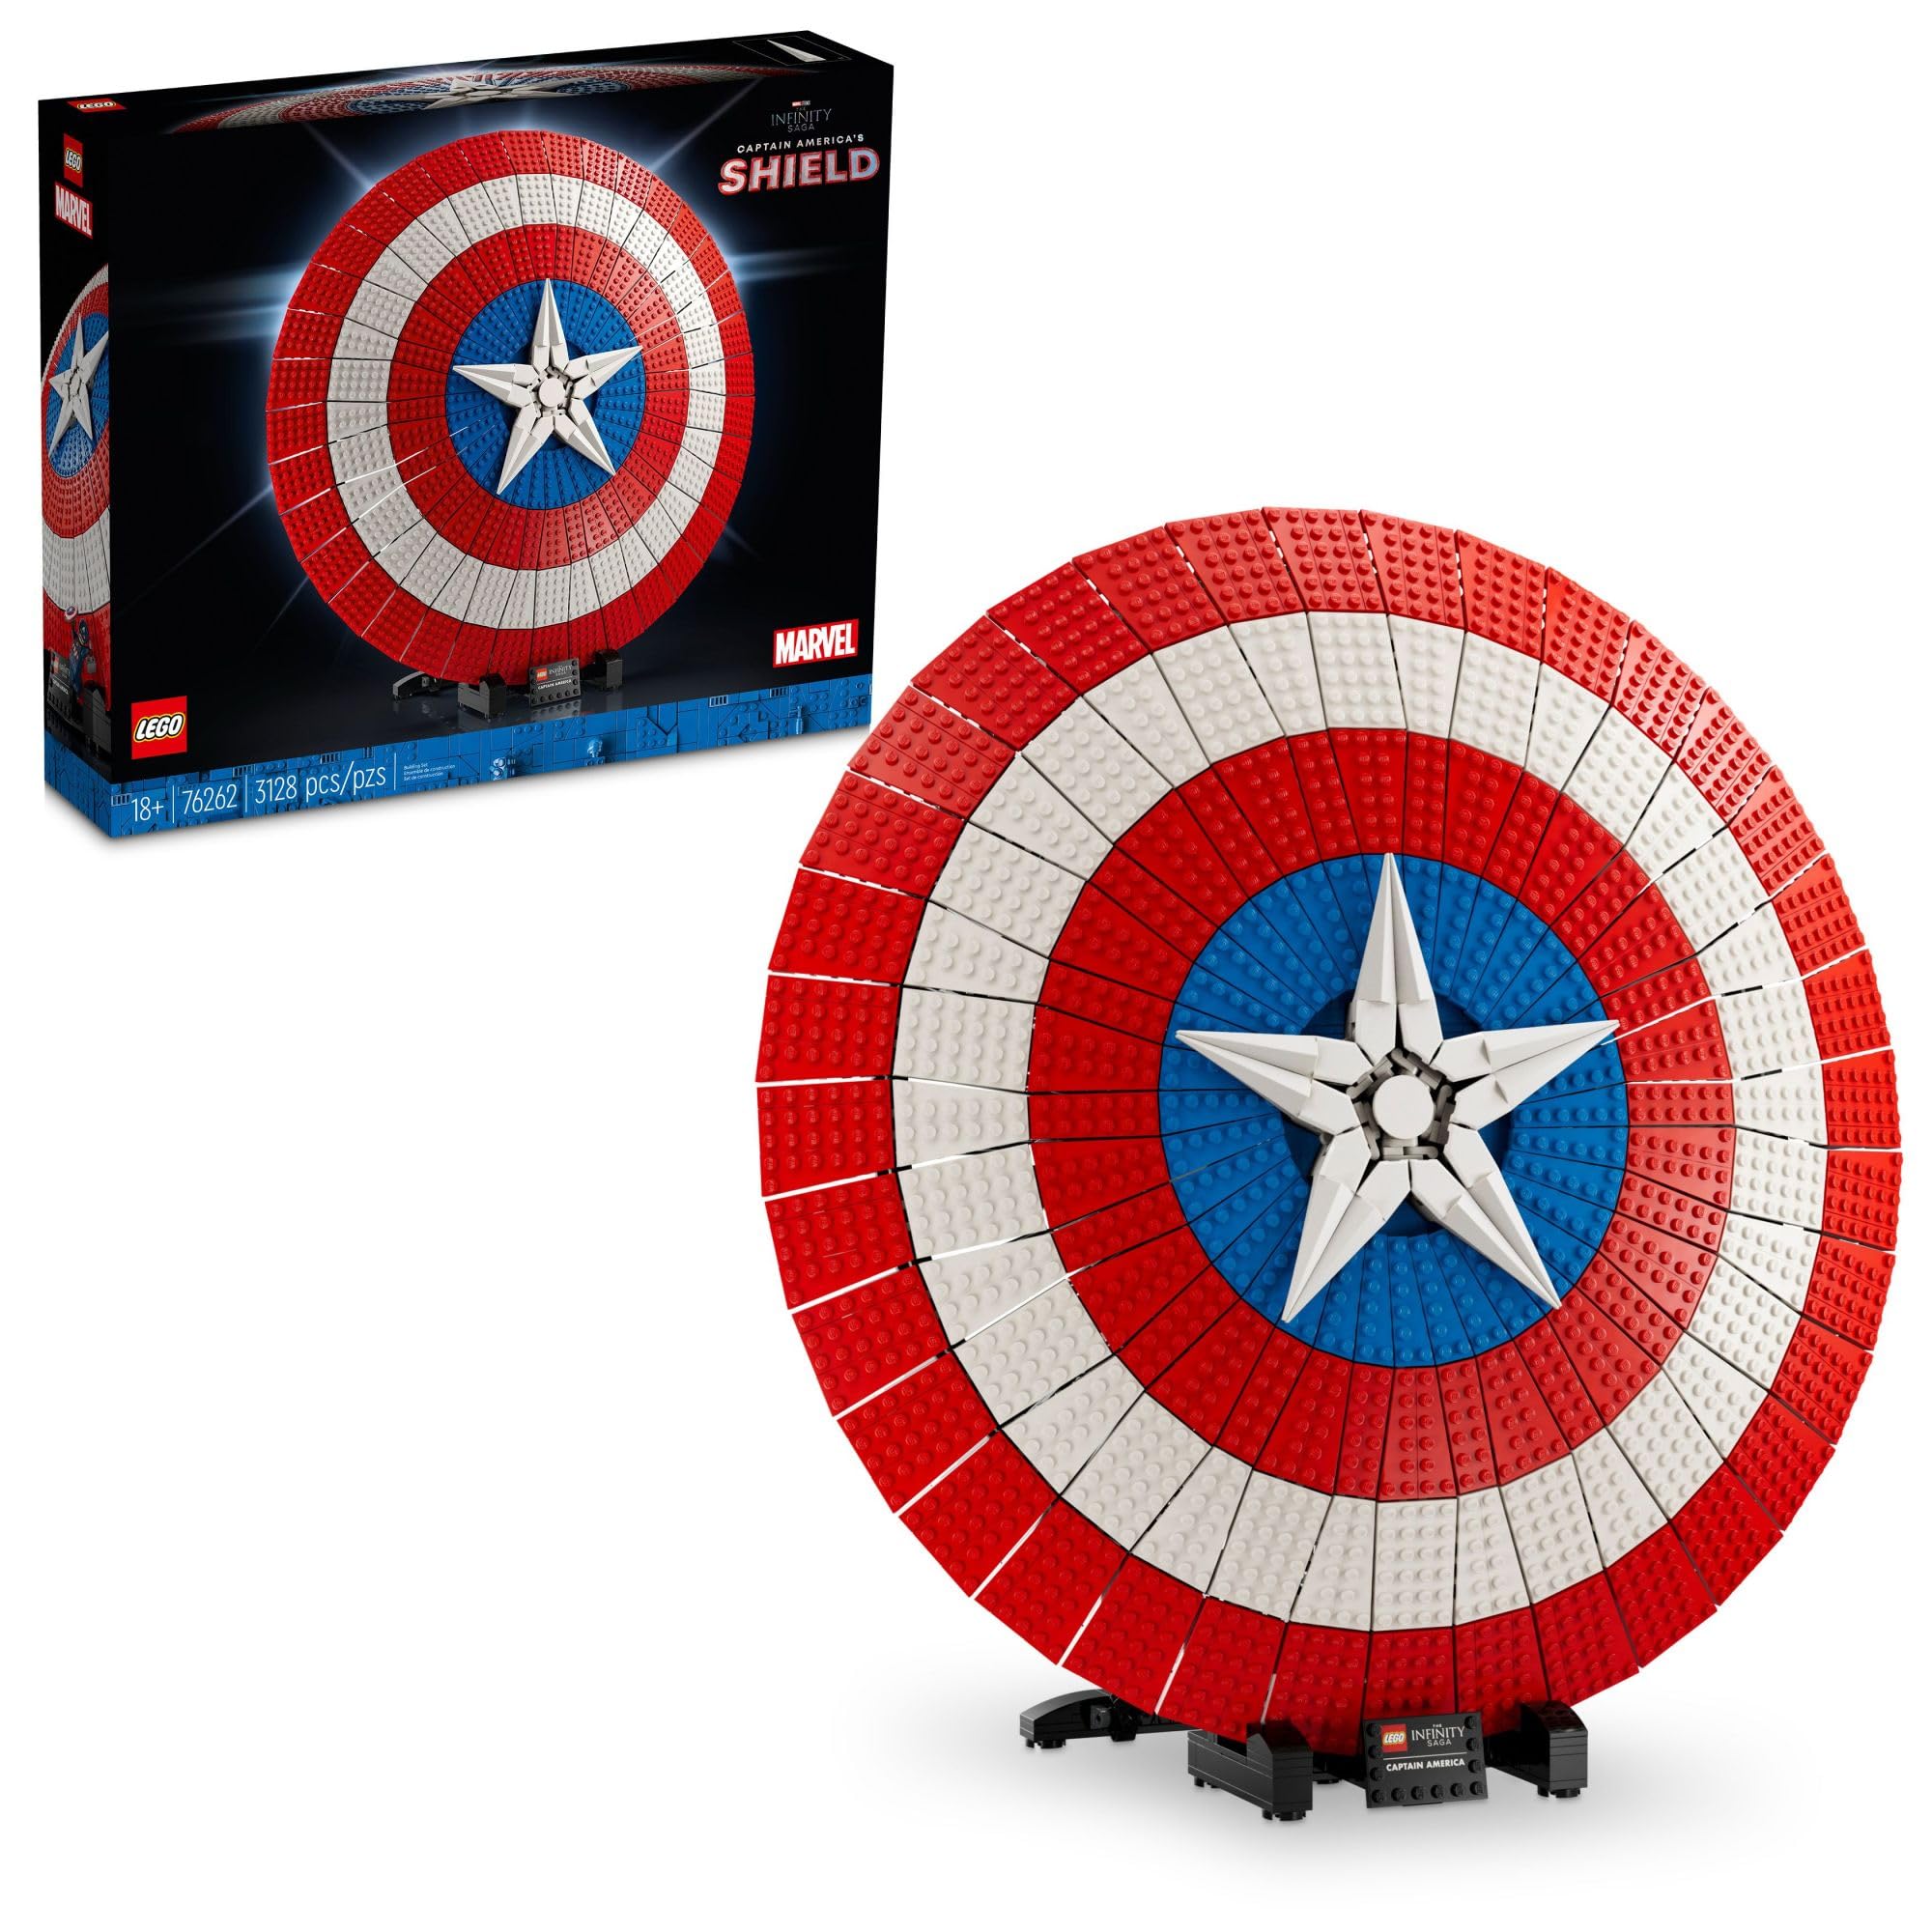 3,128-Piece LEGO Marvel Captain America’s Shield $140 + Free Shipping